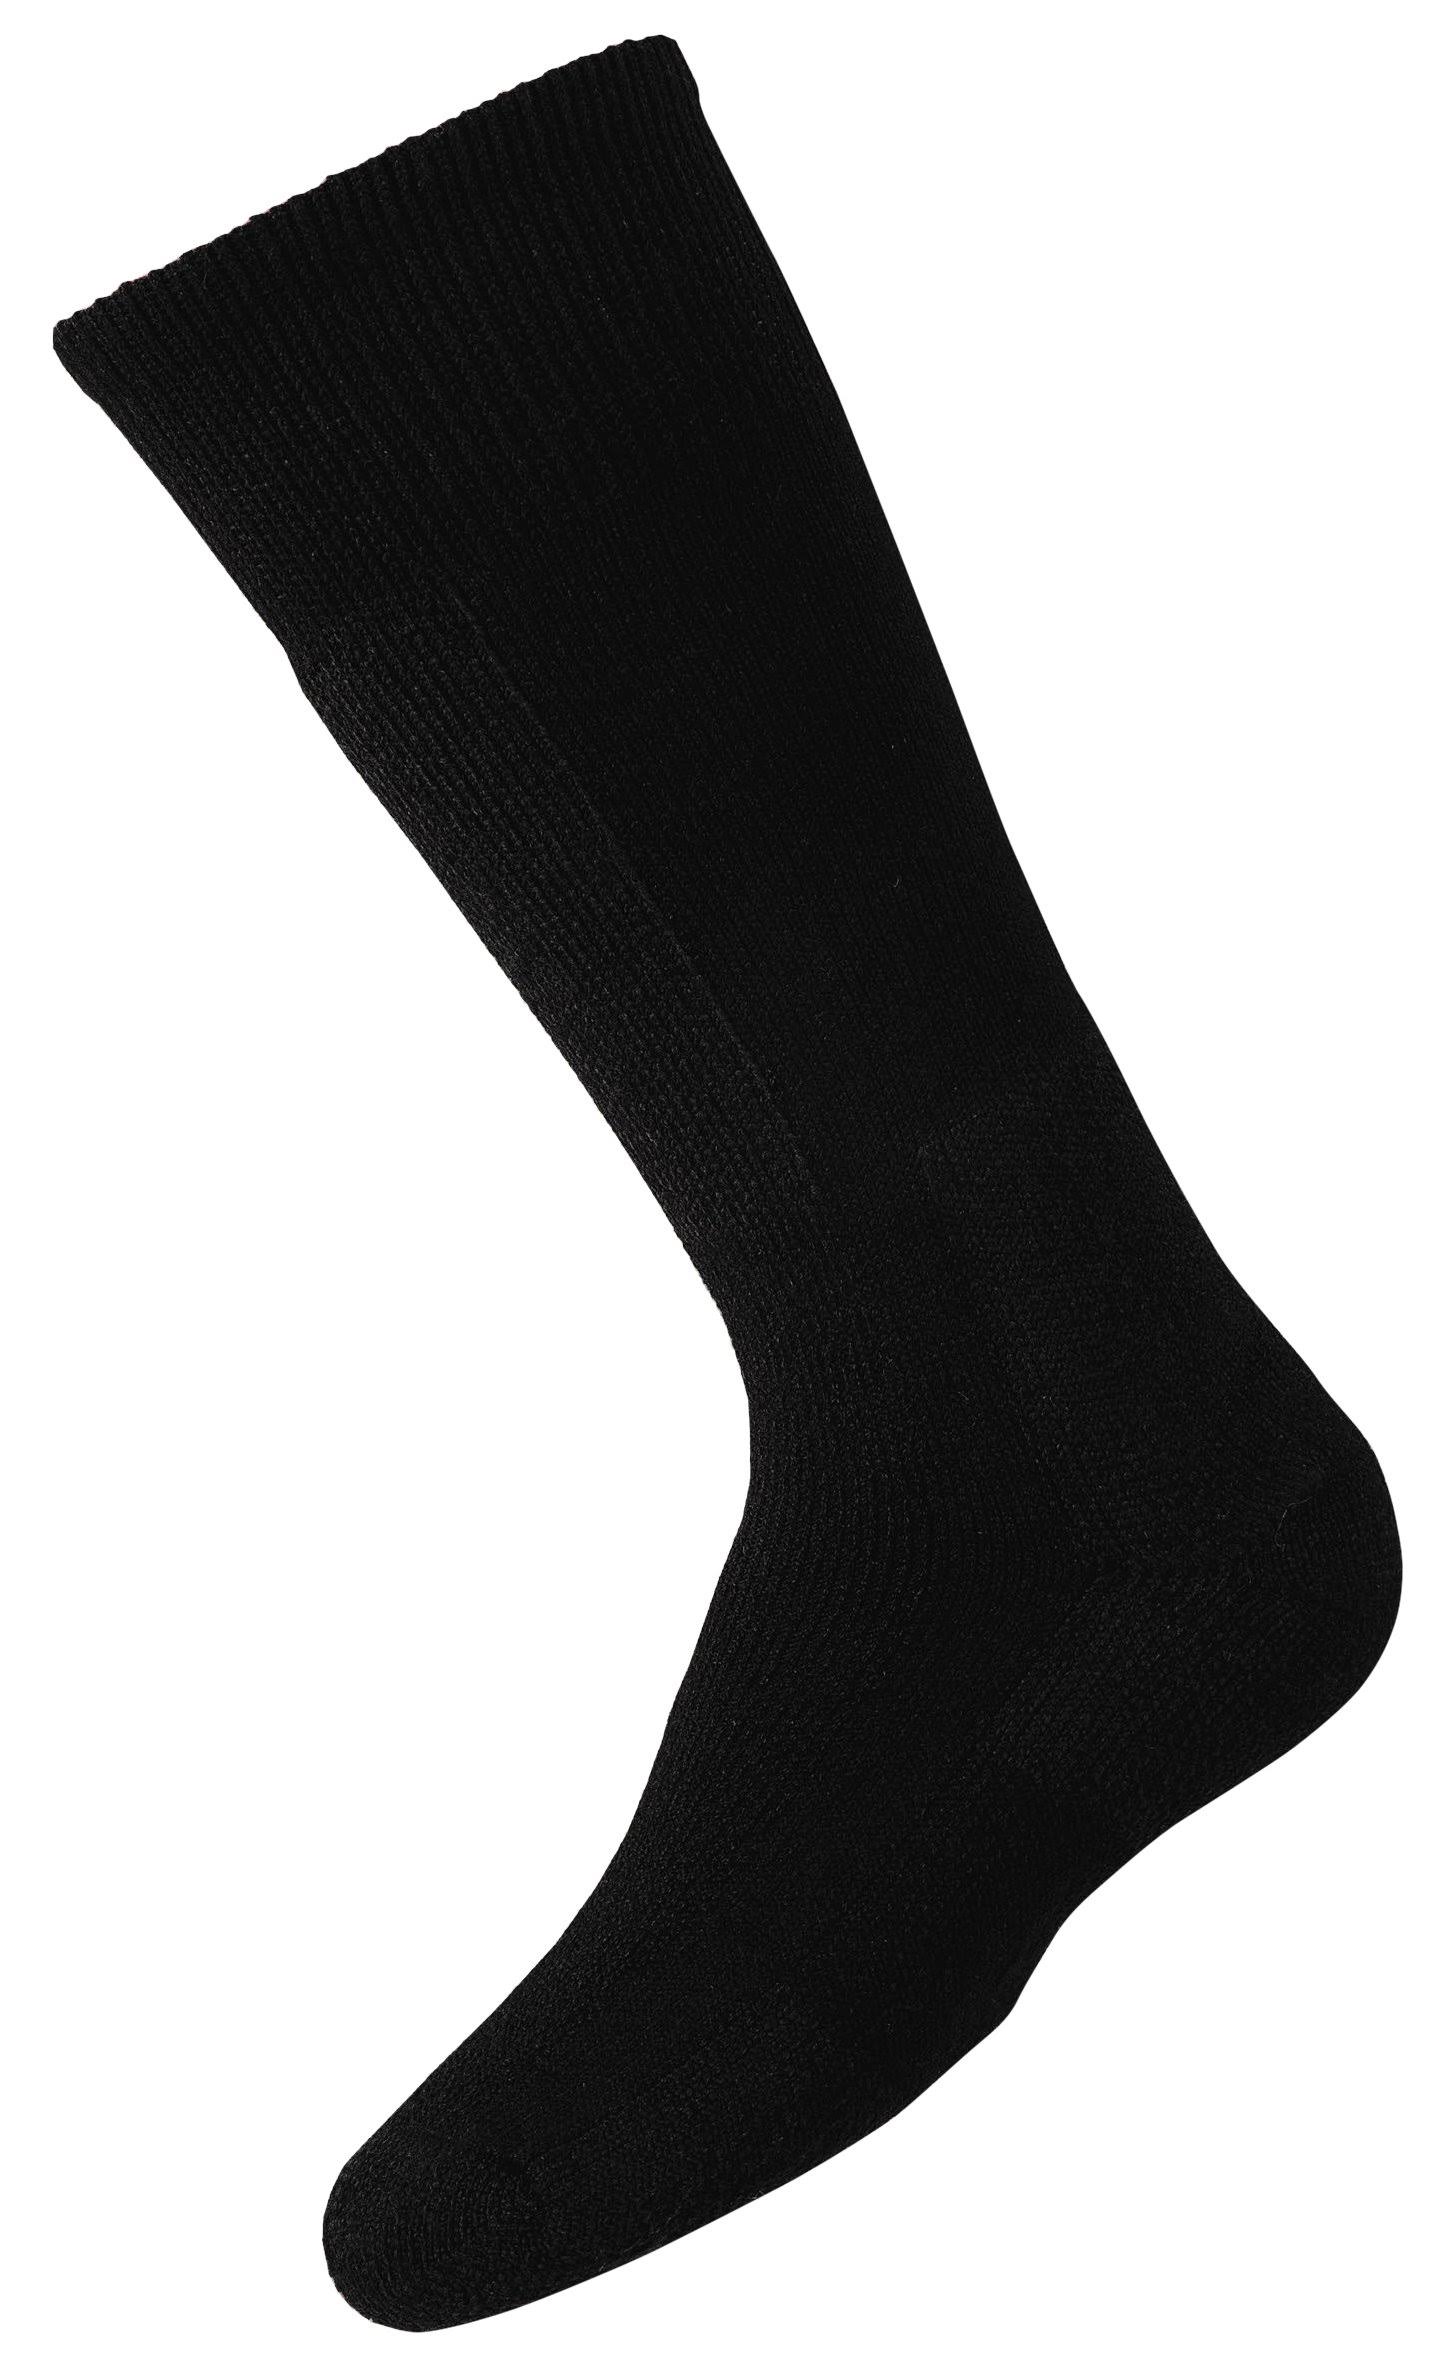 Thorlo Junior Snow Socks - Black, Size: 3.5-5